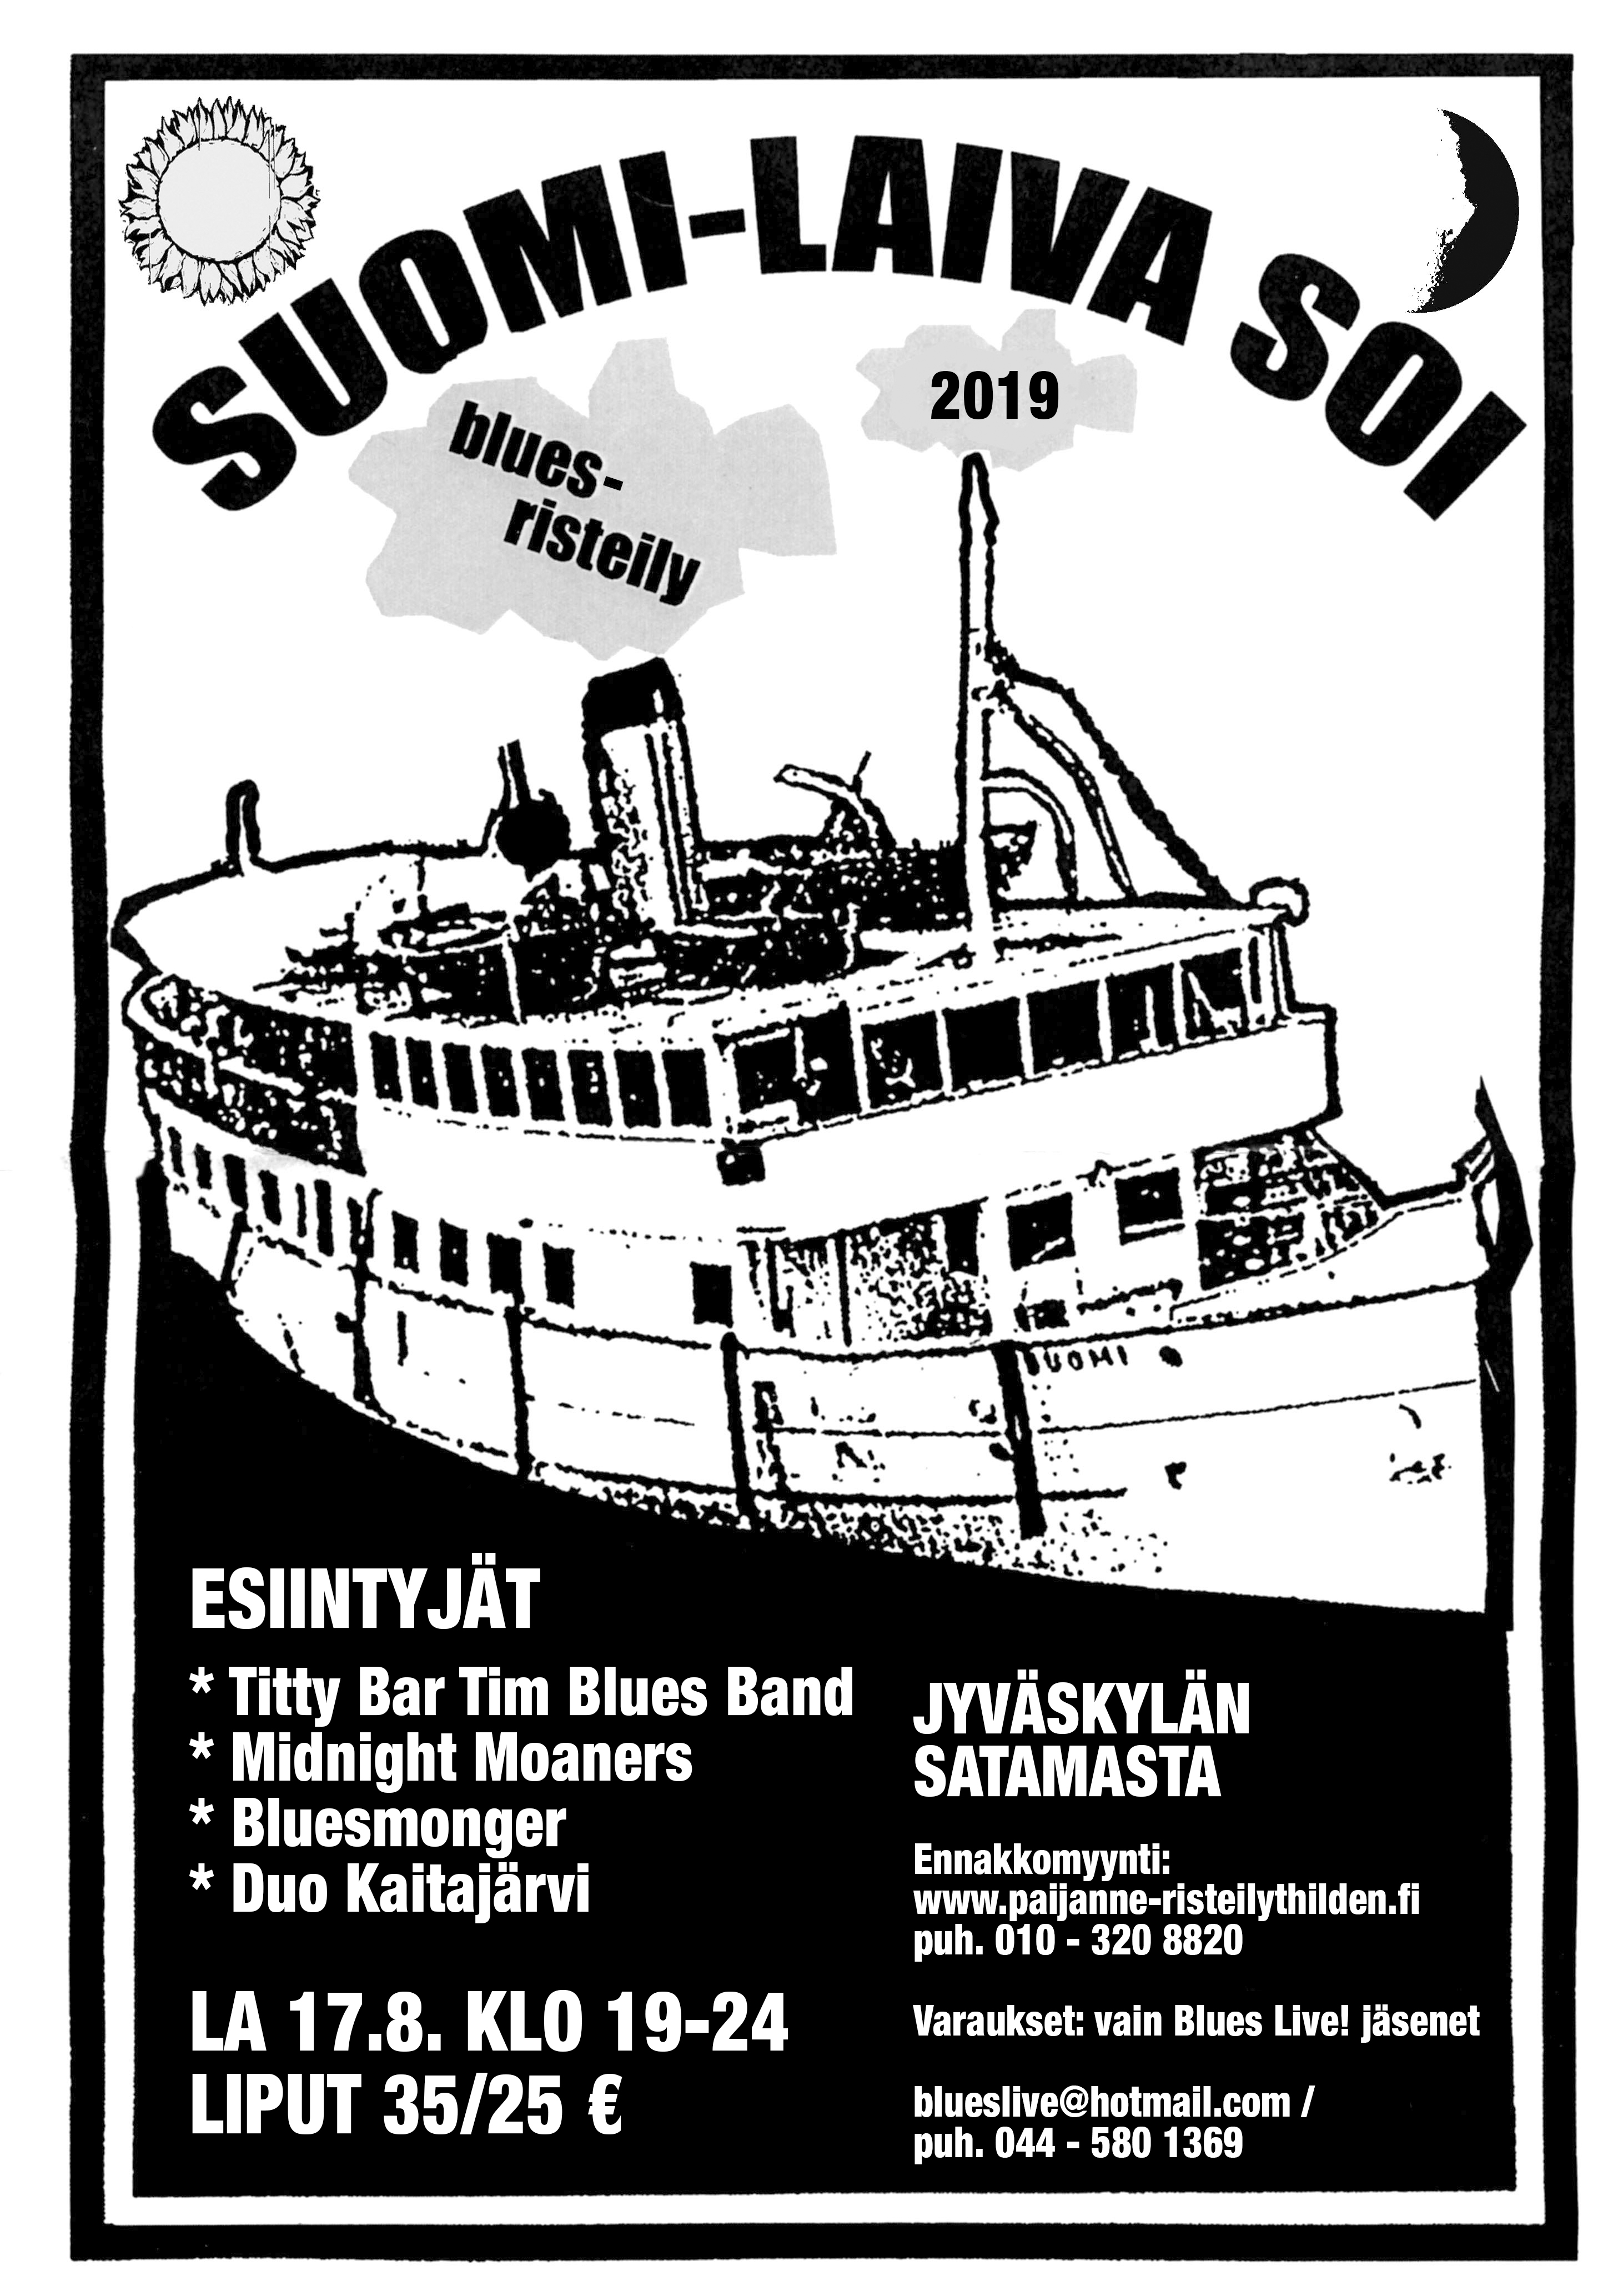 Suomilaiva 2019